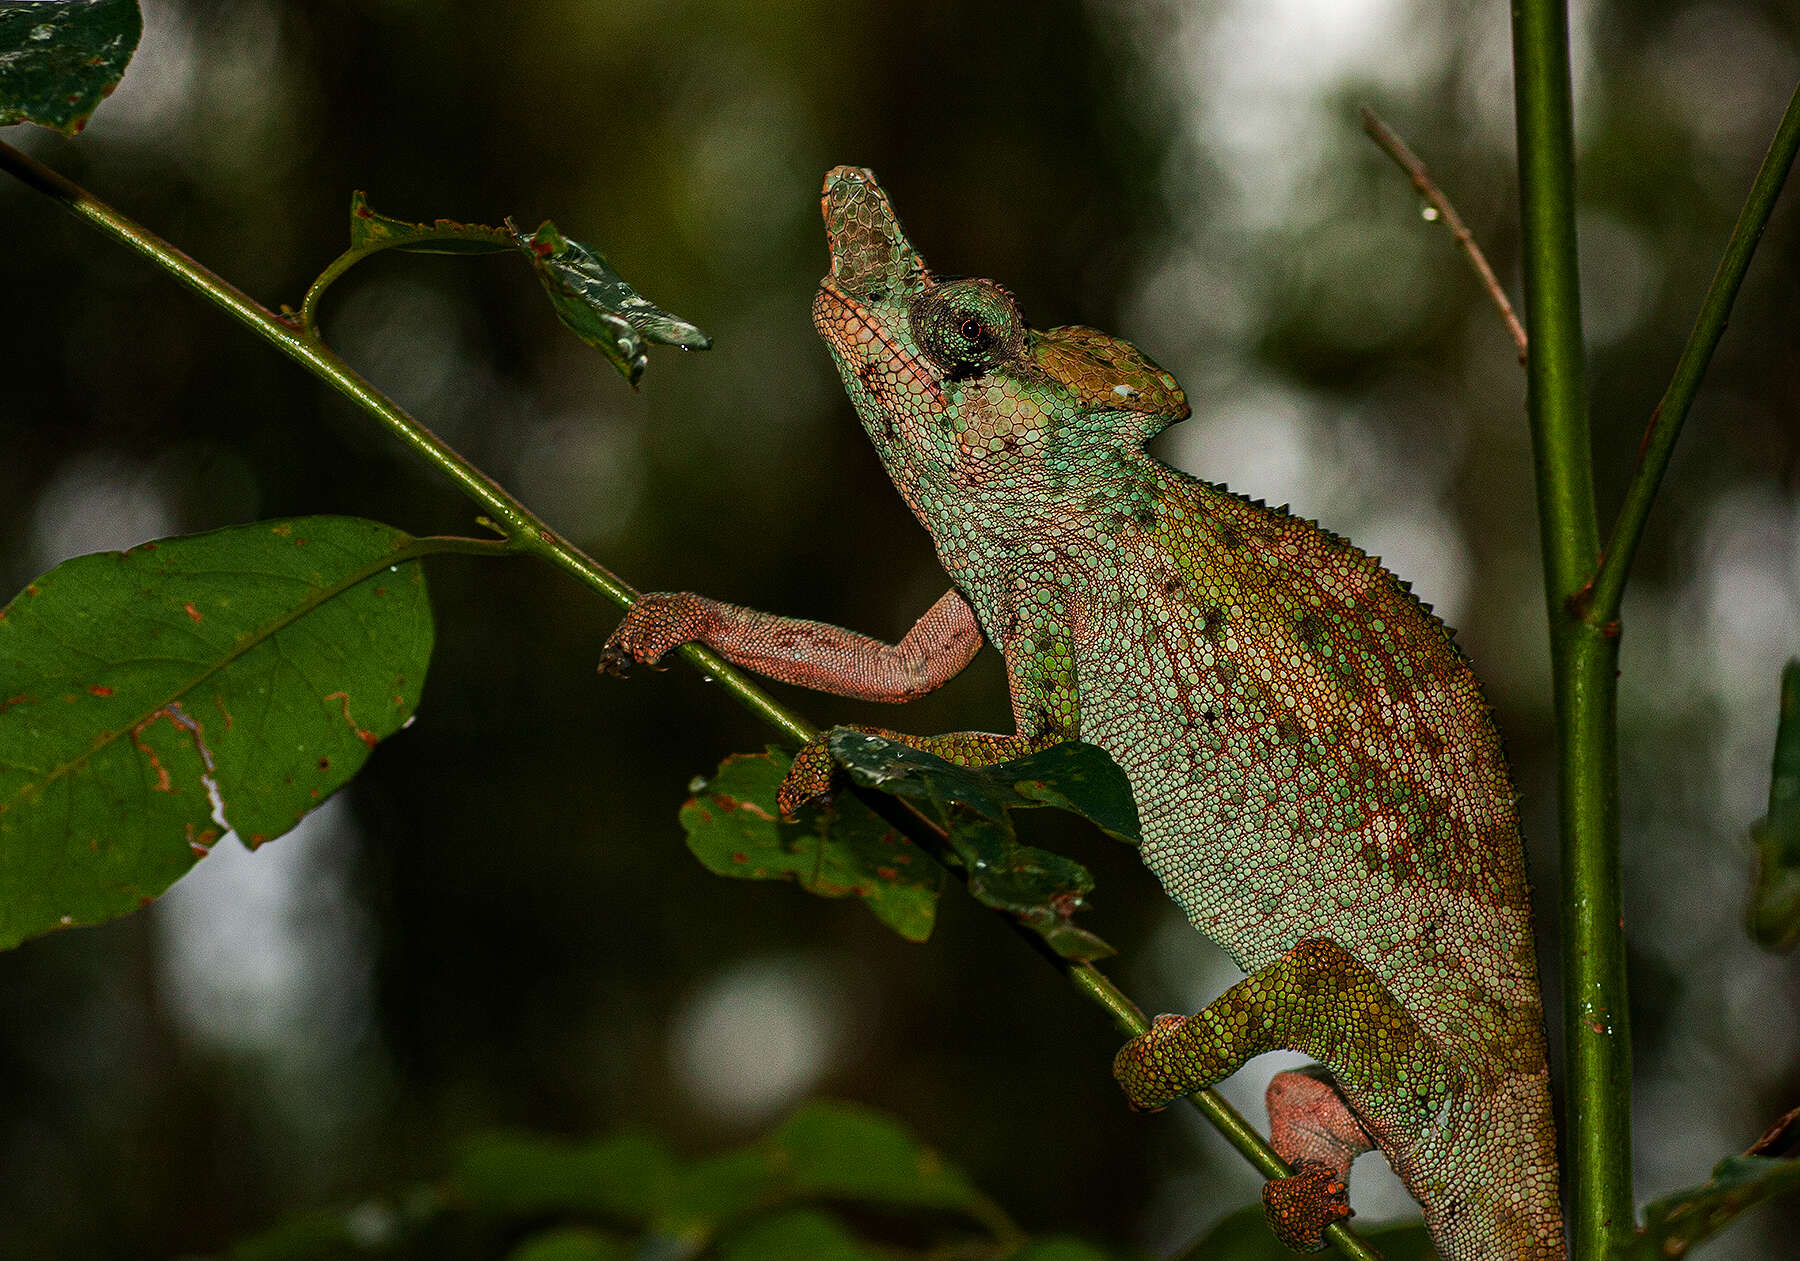 Image of Rwenzori Plate-nosed Chameleon